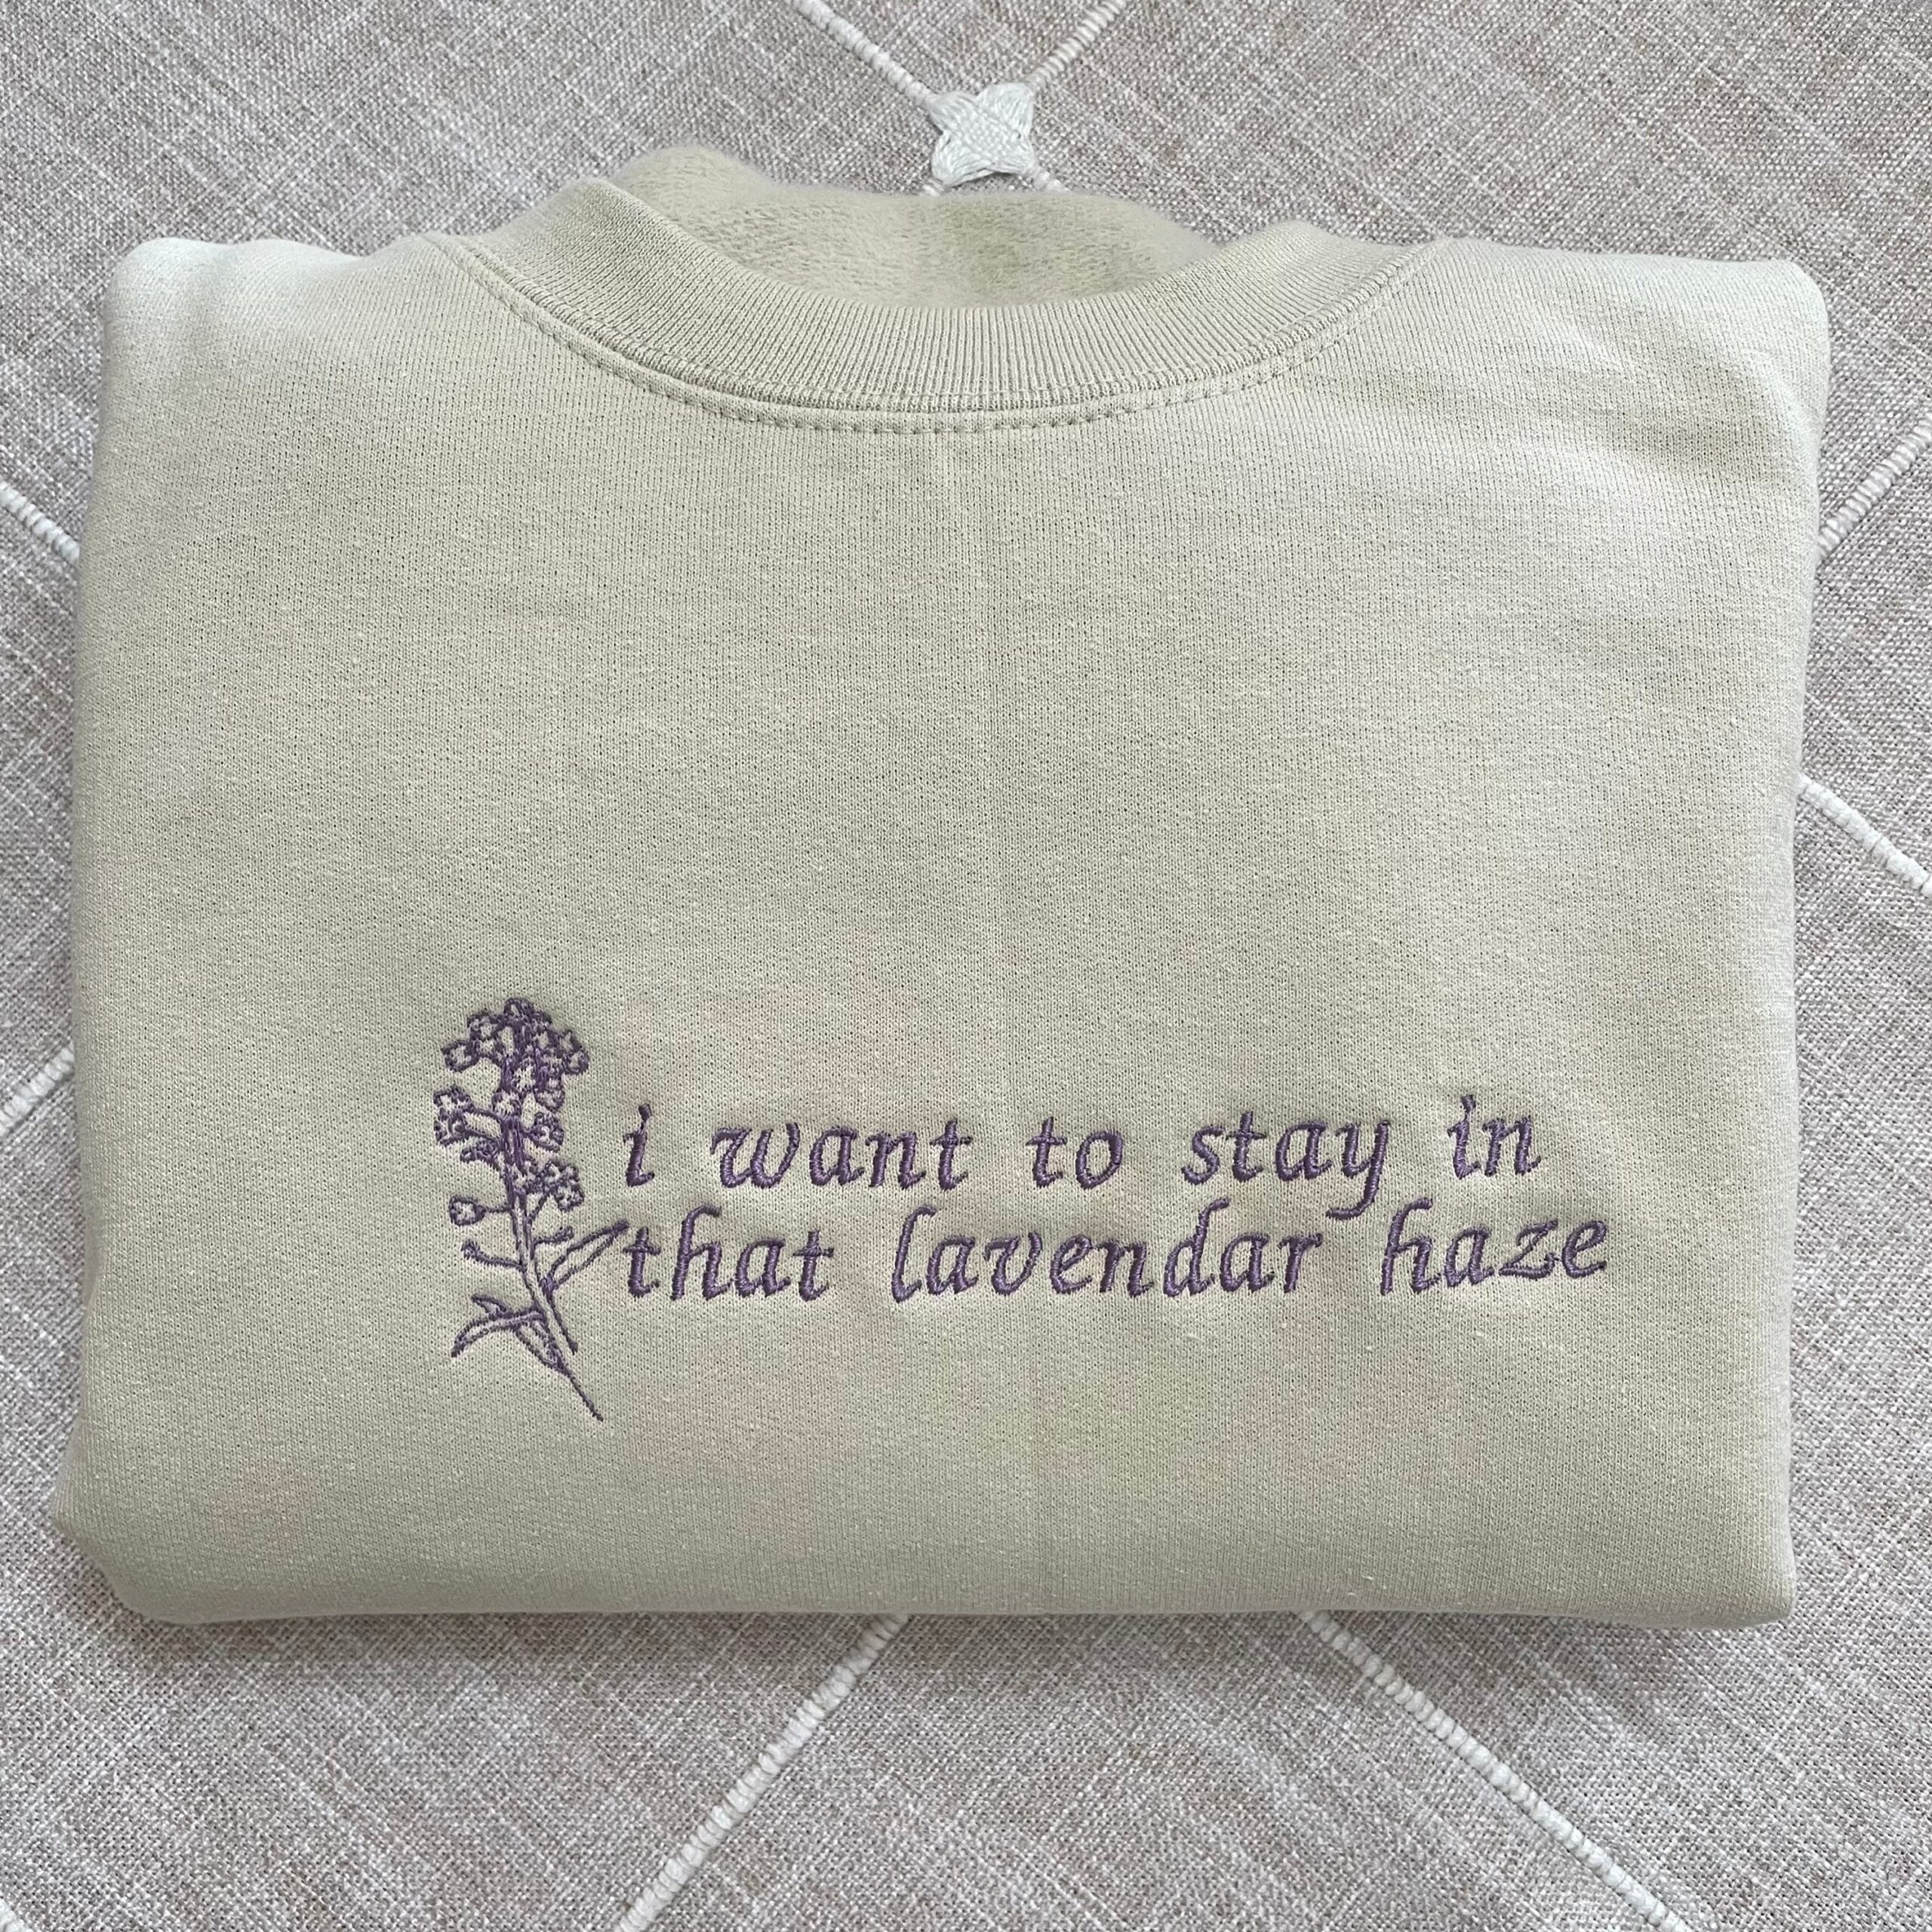 taylor-swift-lavender-haze-embroidered_1667842416-scaled-1.jpg